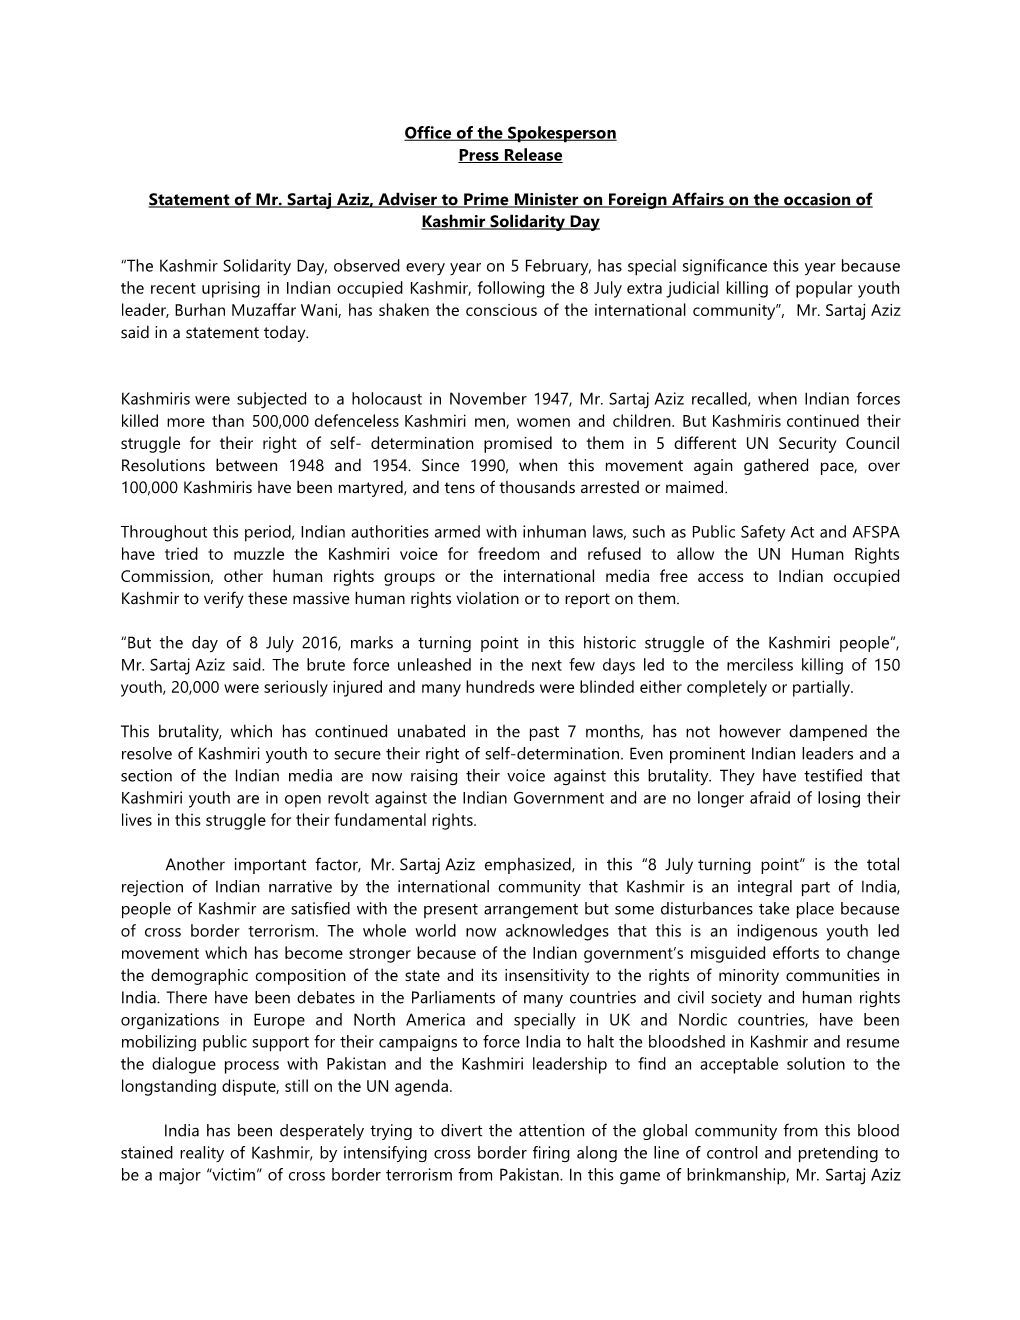 Office of the Spokesperson Press Release Statement of Mr. Sartaj